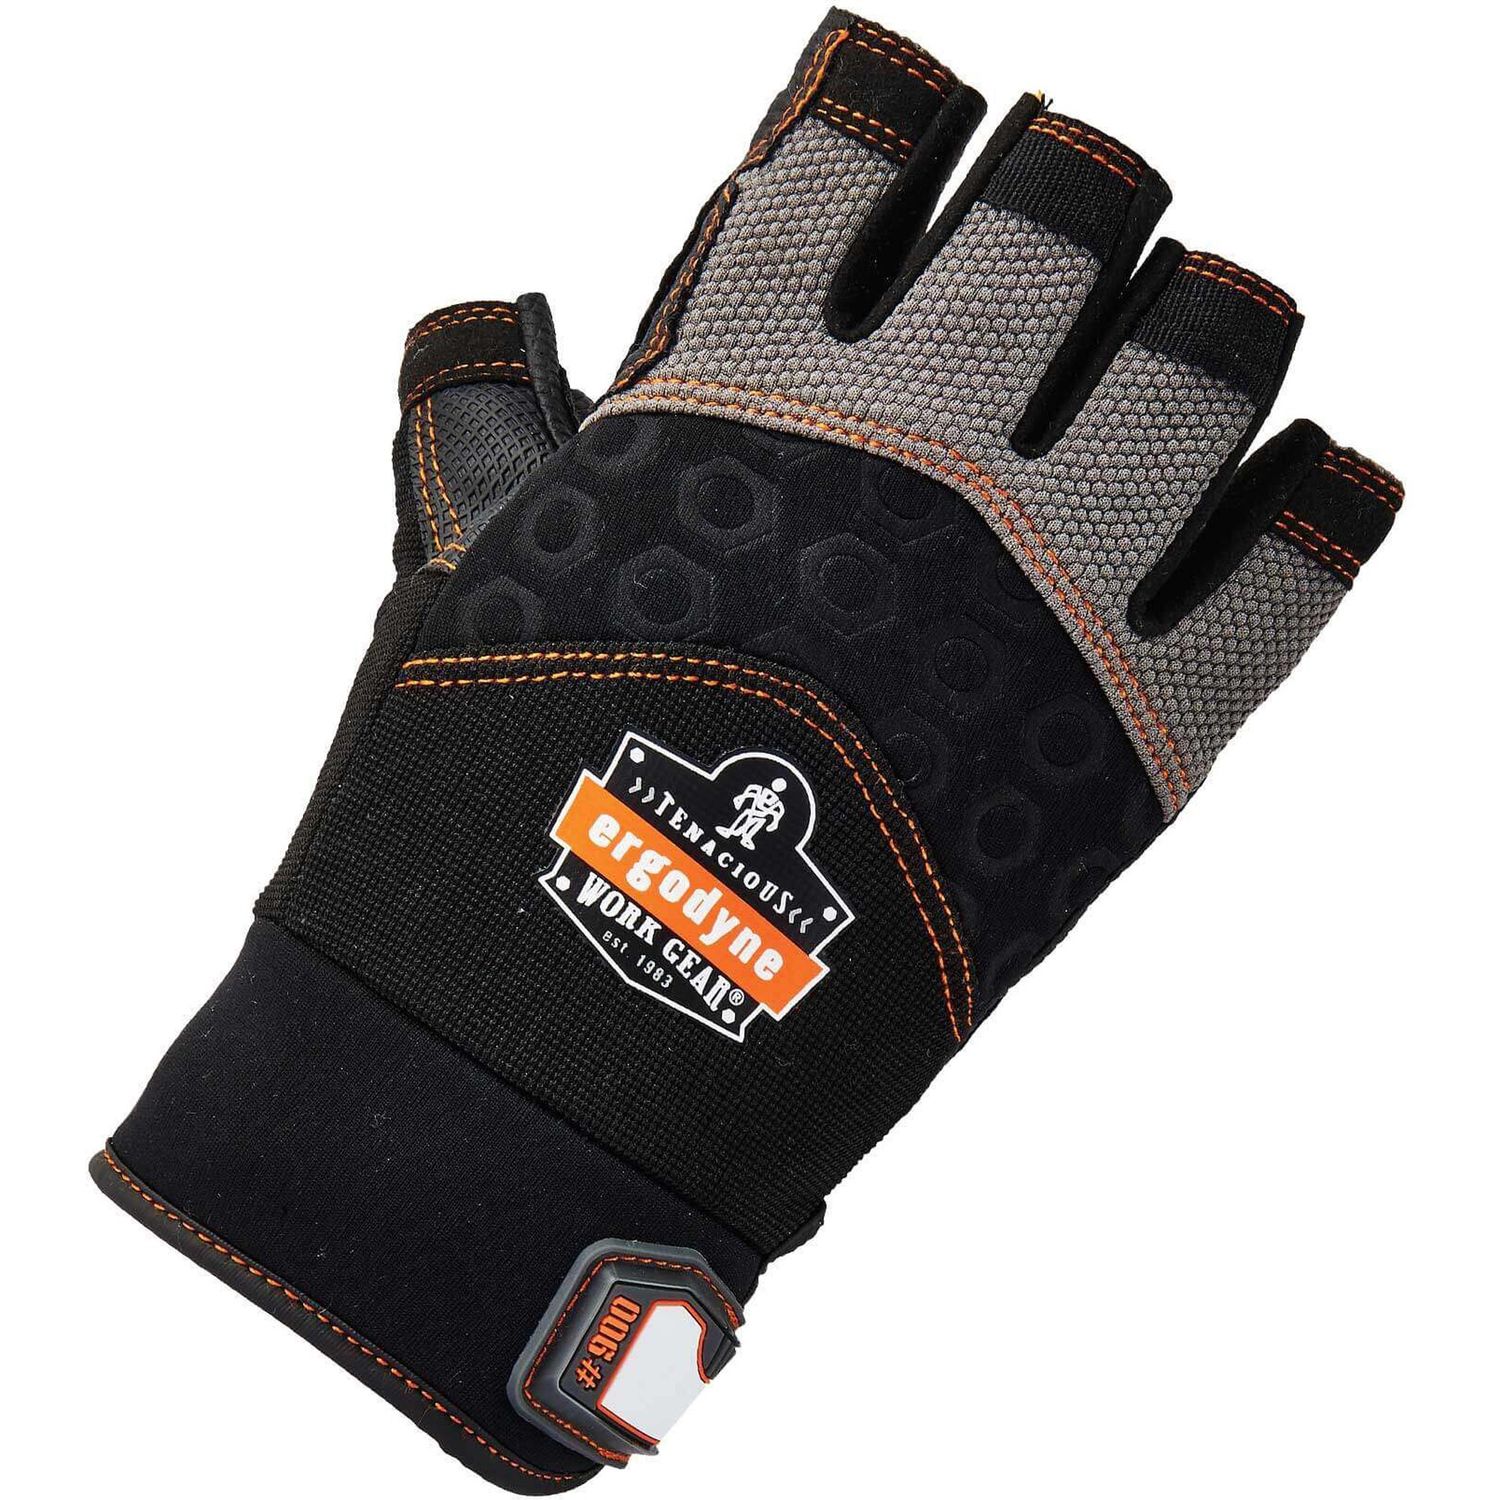 900 Half-Finger Impact Gloves Extra Large Size, Neoprene Knuckle Pad, Spandex, Black